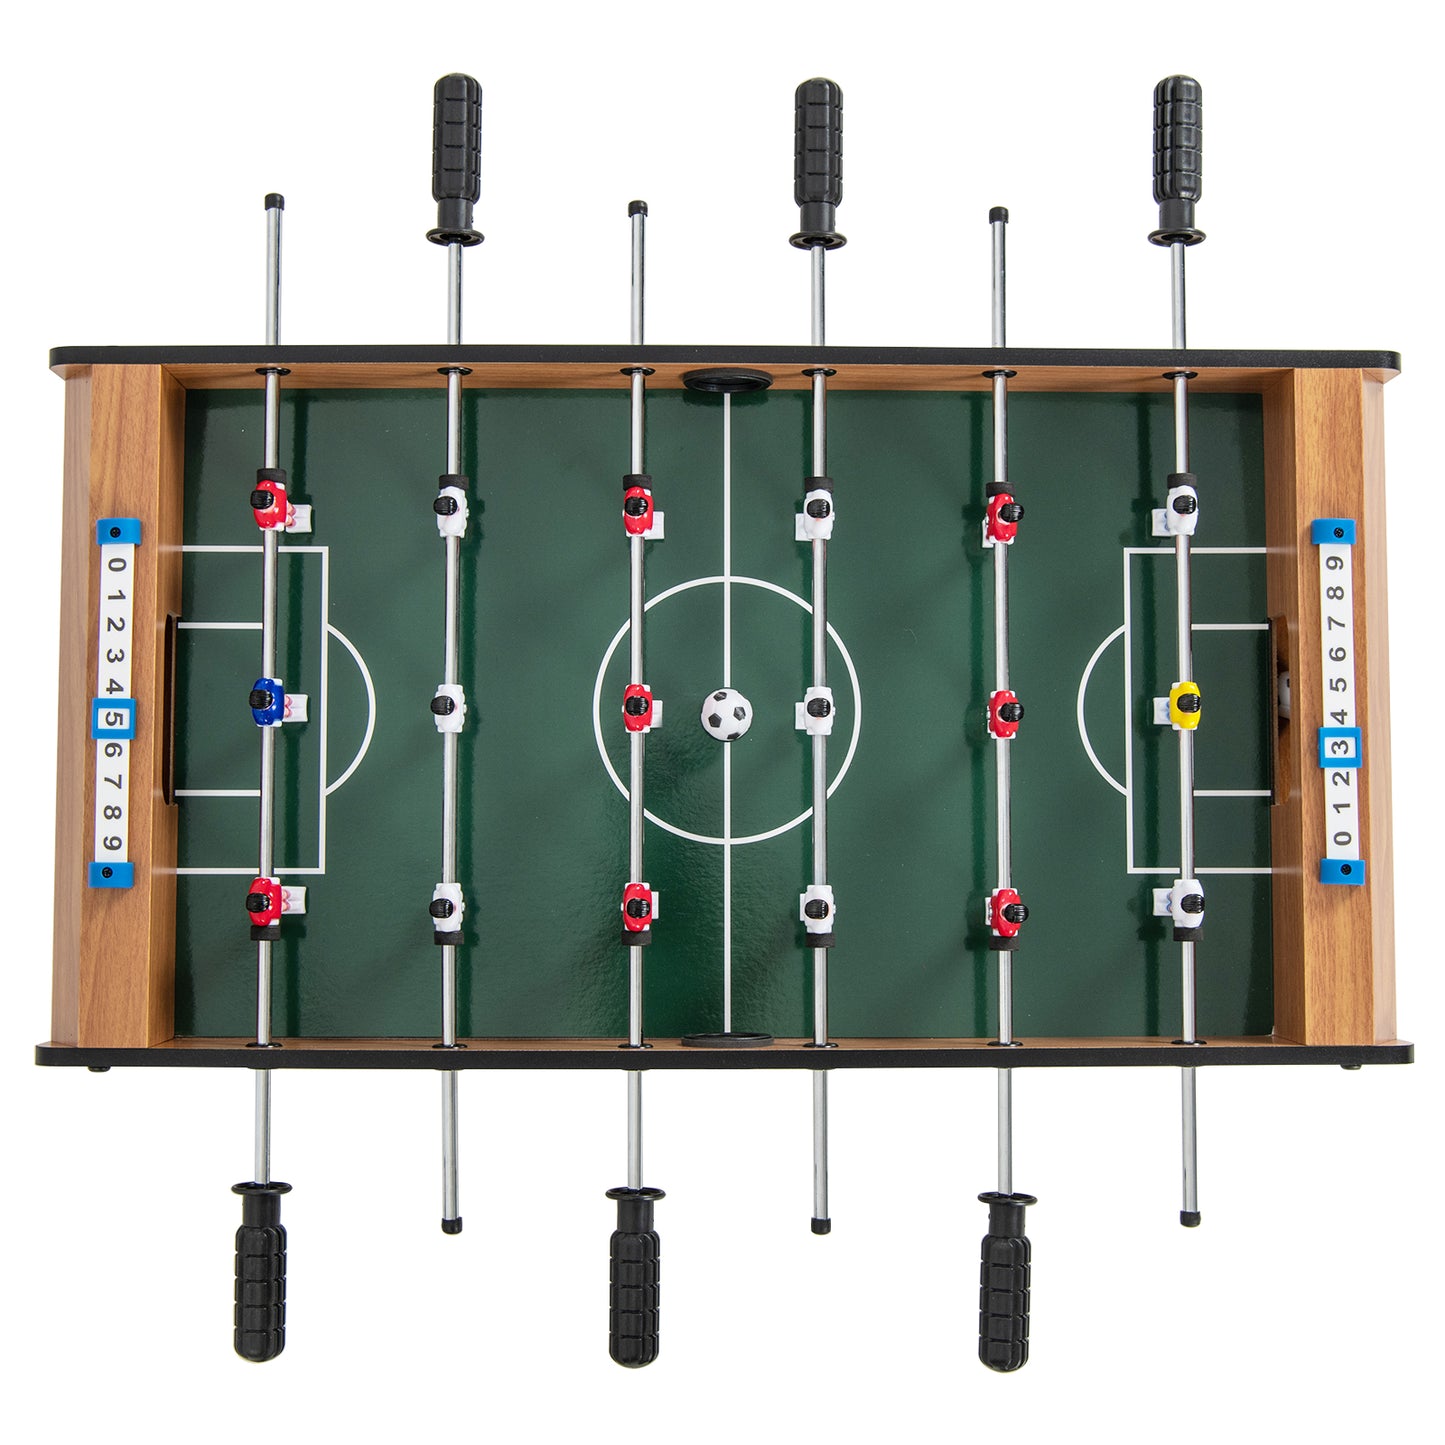 27 Inch Foosball Table Mini Tabletop Soccer Game